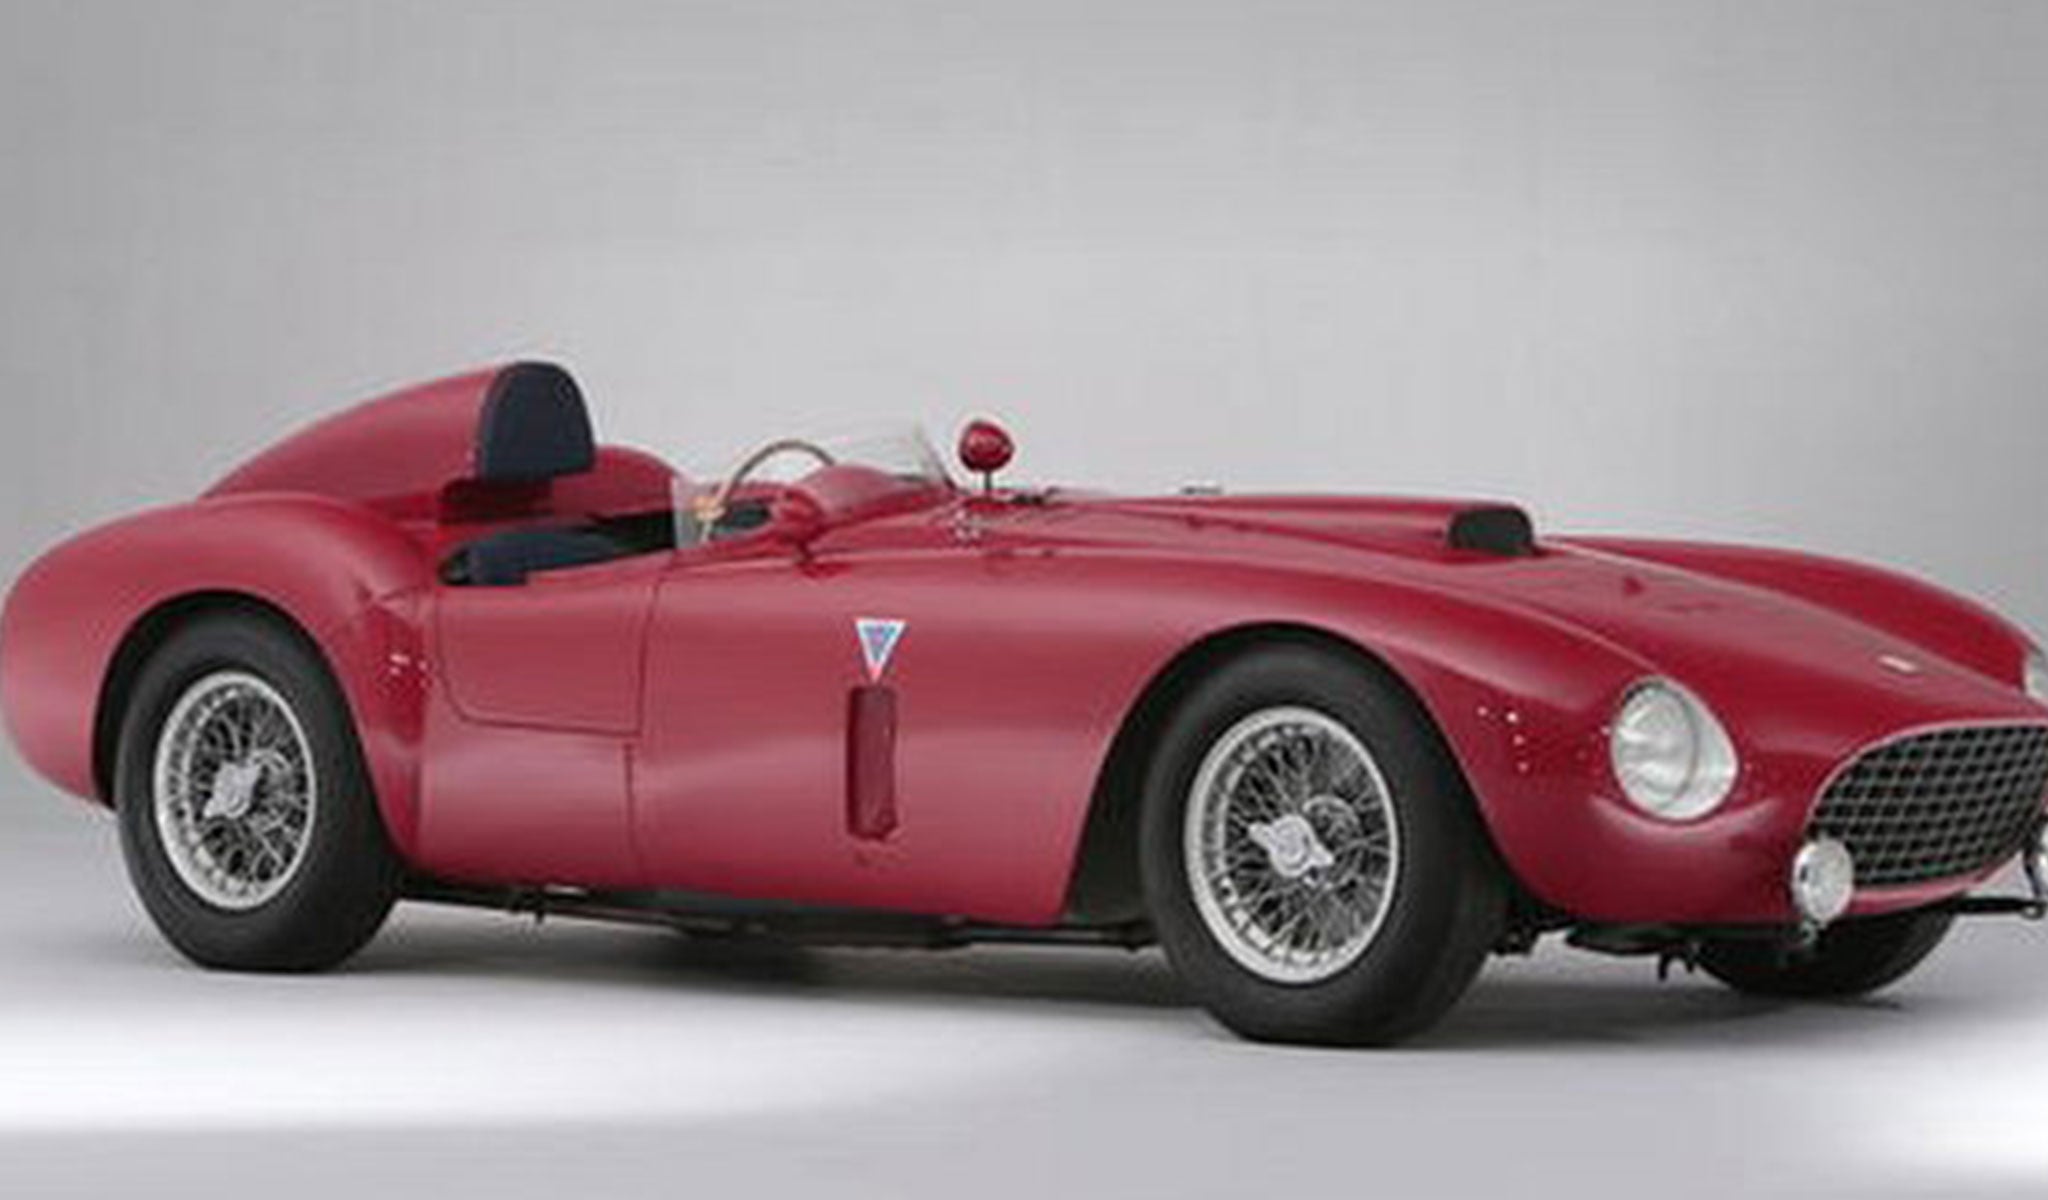 A ‘broken-up’ Ferrari has sold for £10.8 million at Bonham's Goodwood Festival of Speed auction.